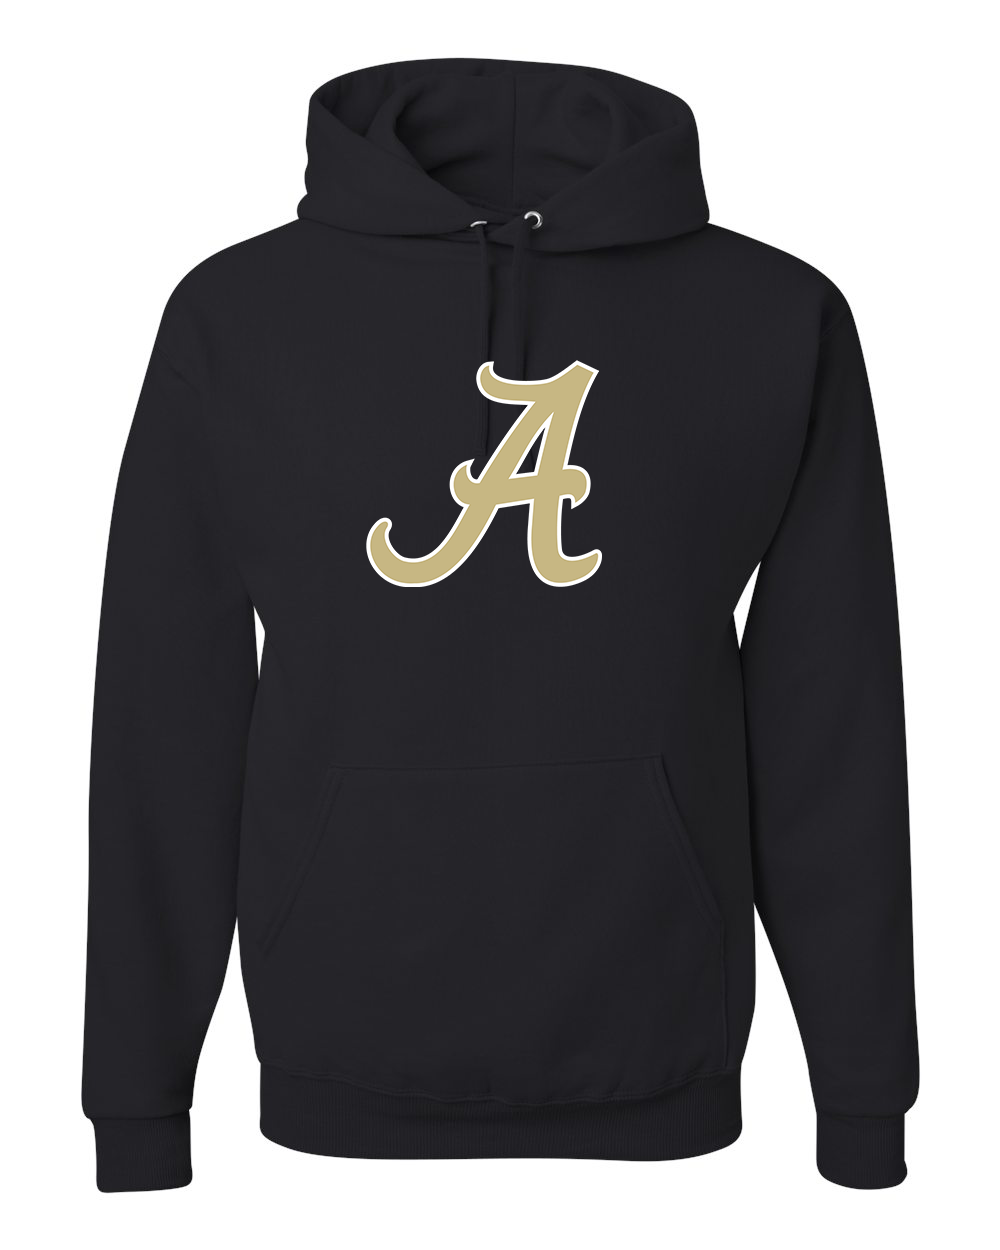 Madison Grant Argylls "A" Hooded Sweatshirt - Black